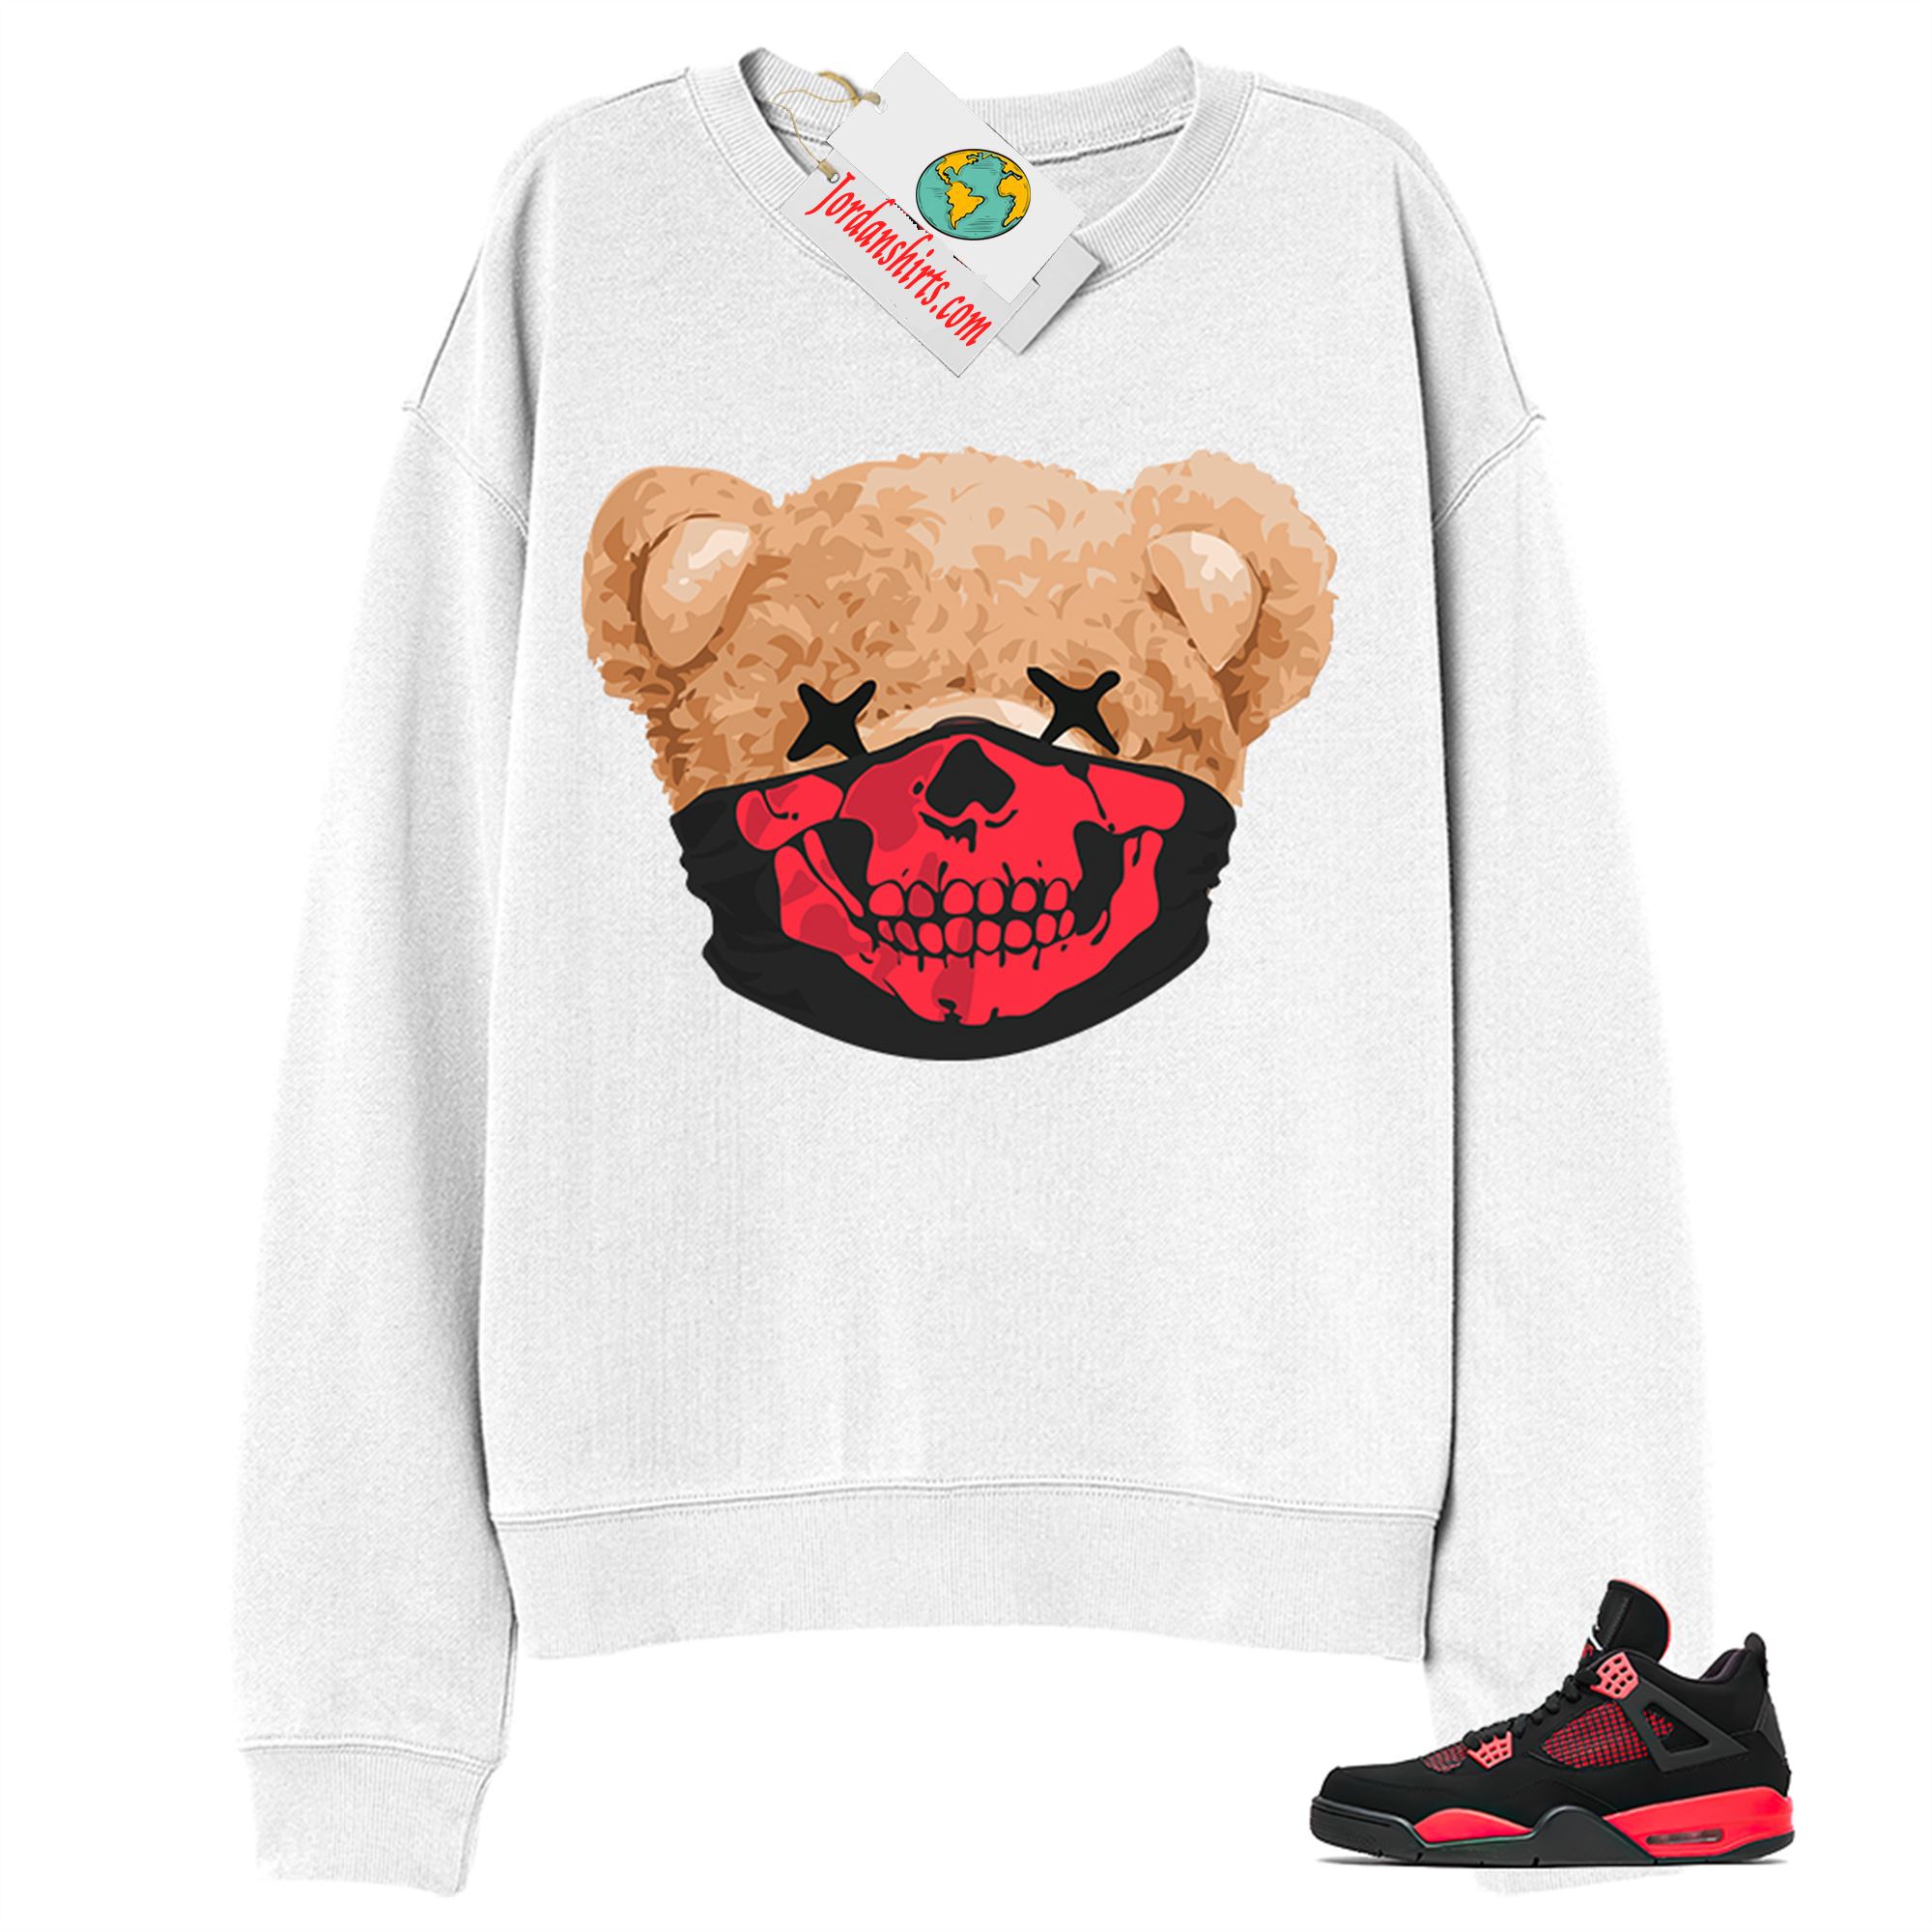 Jordan 4 Sweatshirt, Teddy Bear Skull Bandana White Sweatshirt Air Jordan 4 Red Thunder 4s Plus Size Up To 5xl